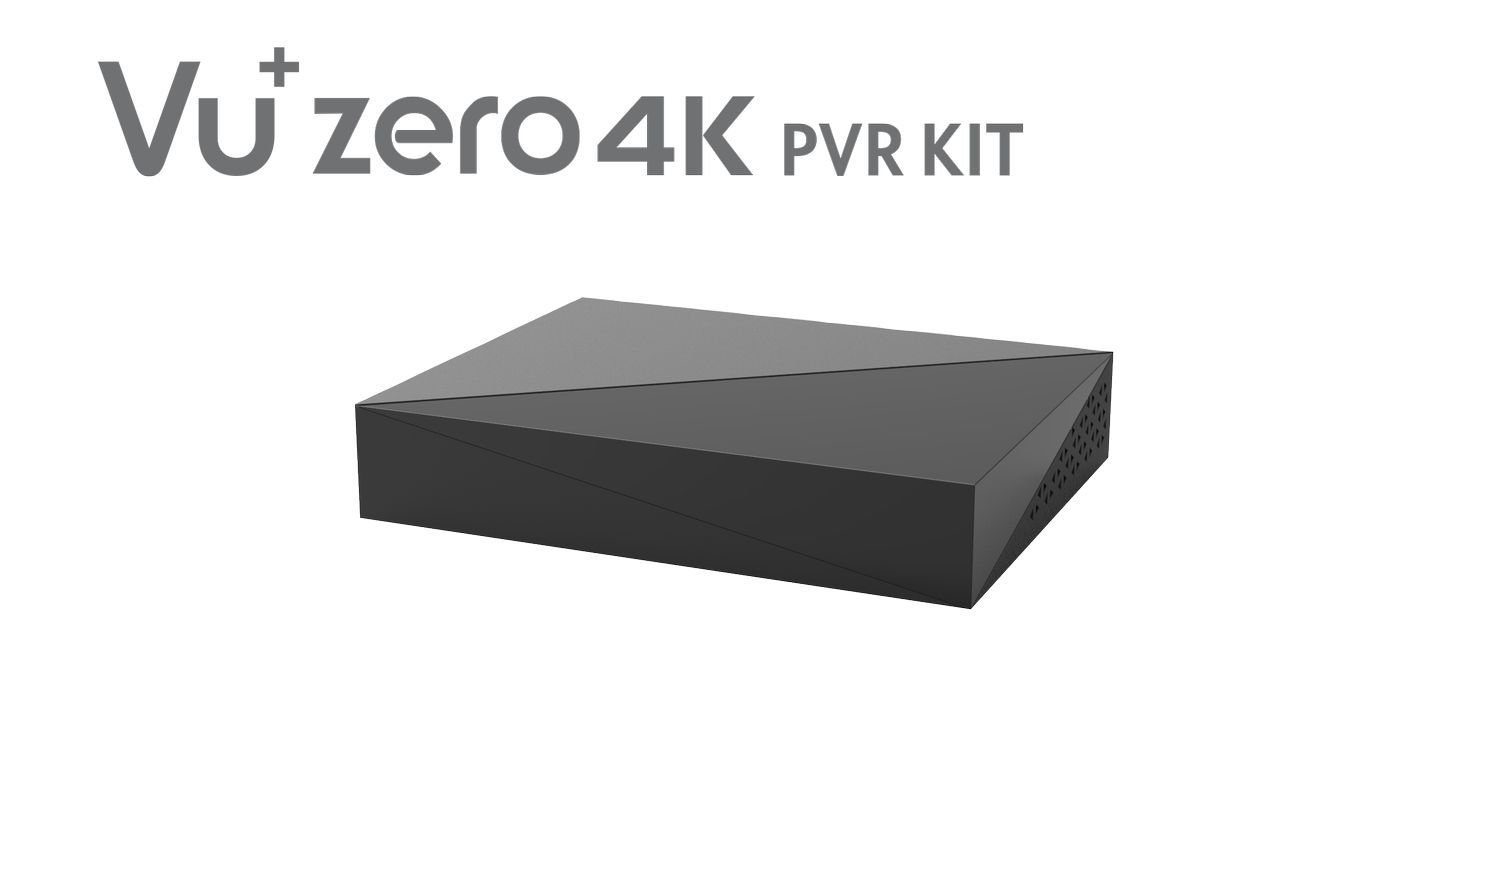 VU+ VU+ Zero Inklusive HDD, Tuner Kit PVR 2TB, 4K schwarz